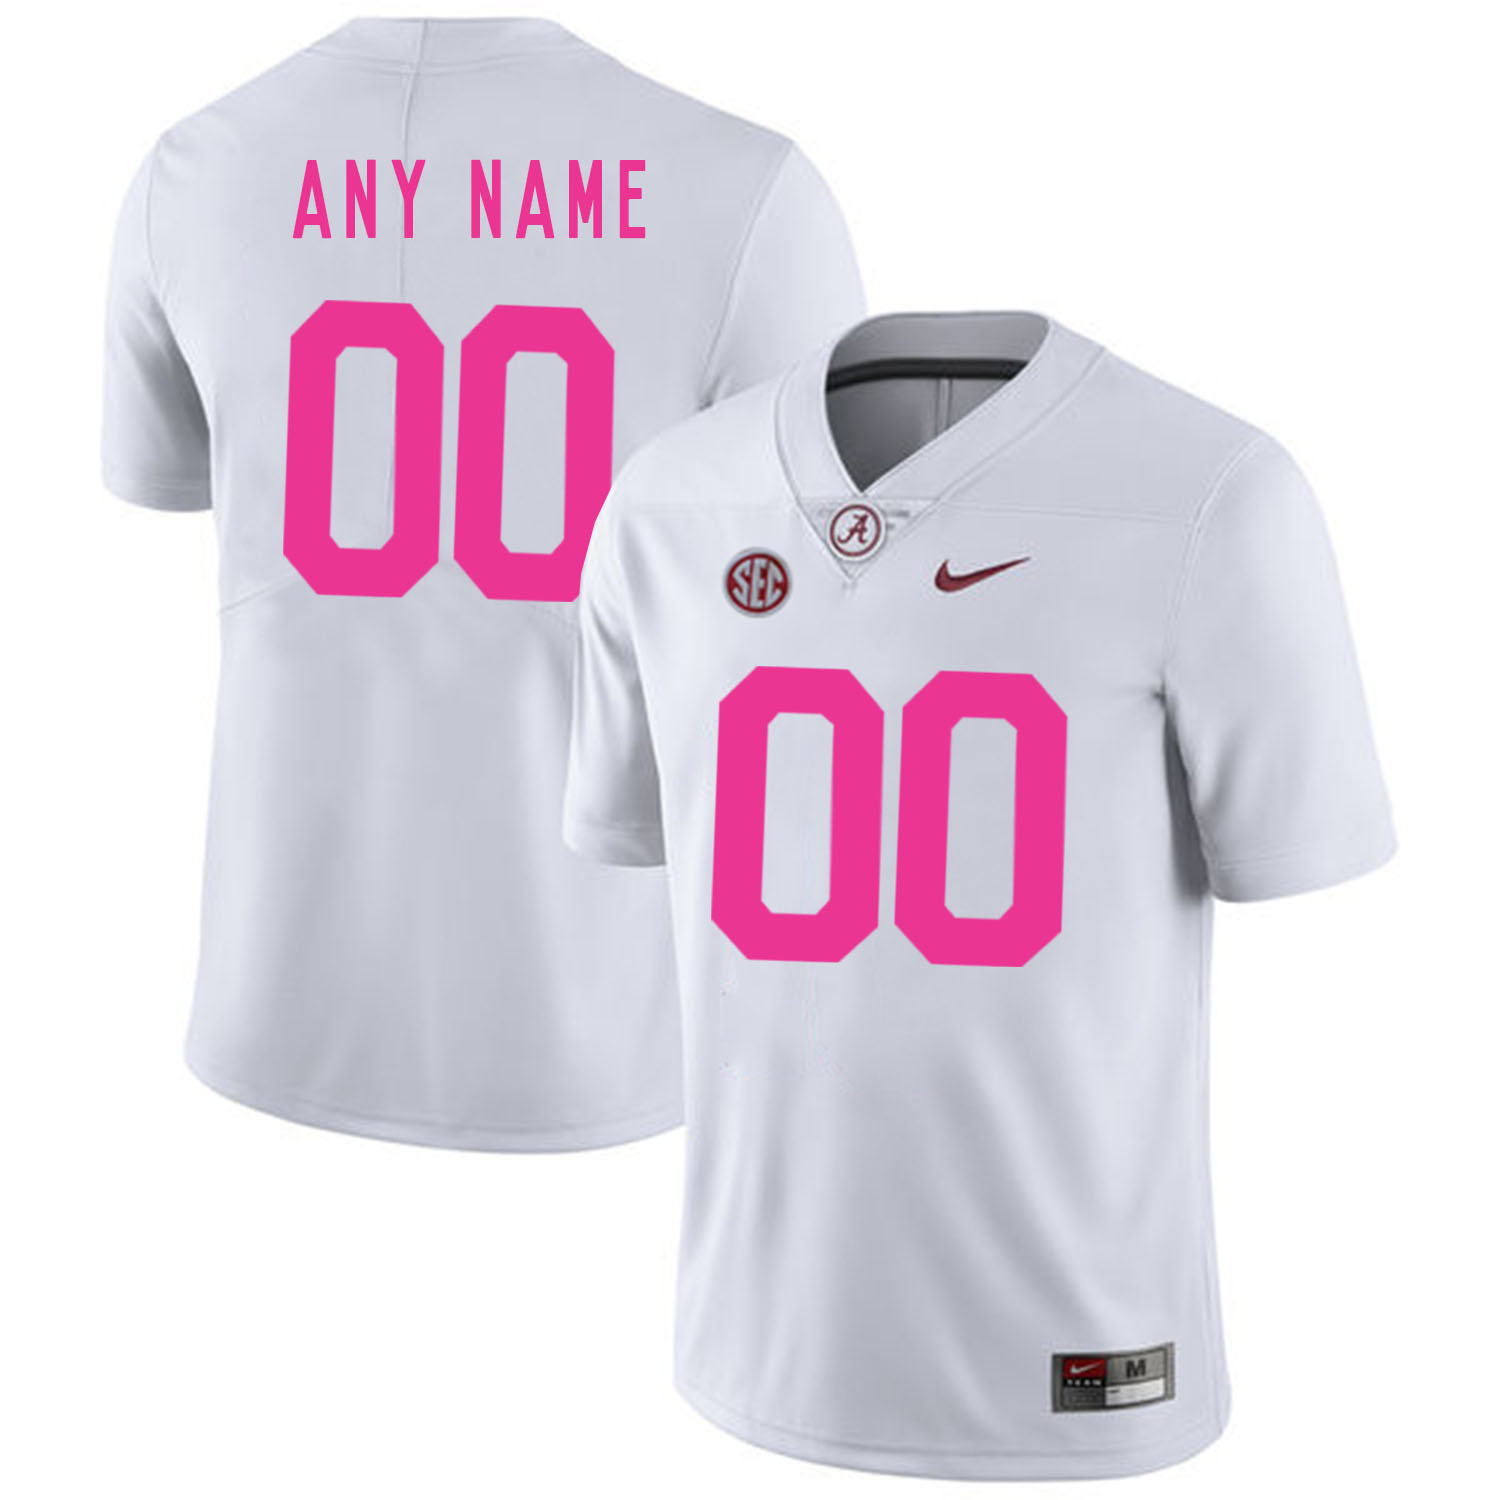 Alabama Crimson Tide White Men's Customized 2018 Breast Cancer Awareness College Football Jersey